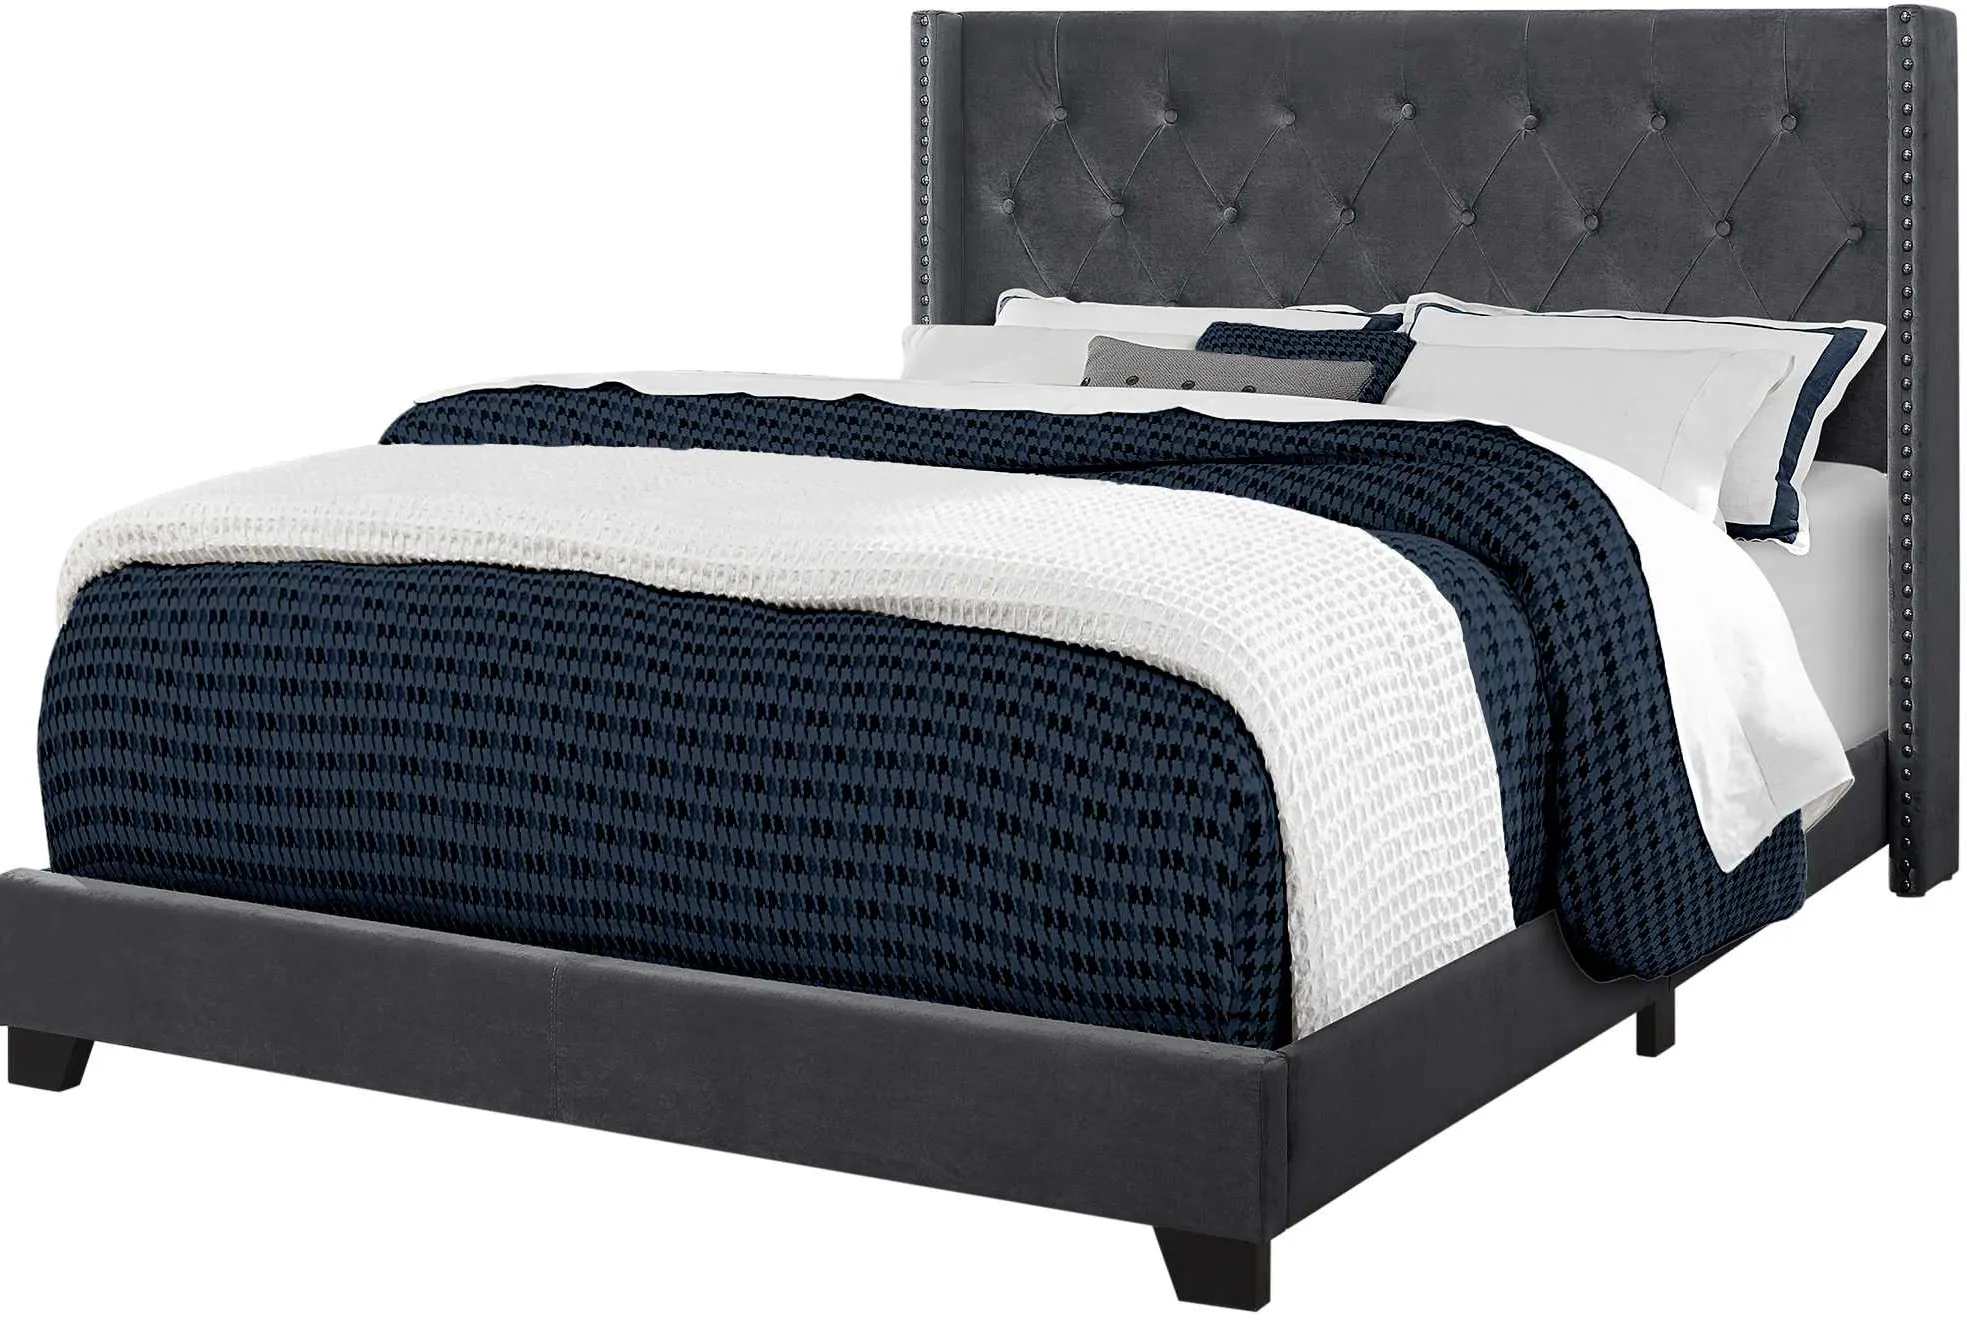 Bed, Queen Size, Platform, Bedroom, Frame, Upholstered, Velvet, Wood Legs, Grey, Chrome, Transitional